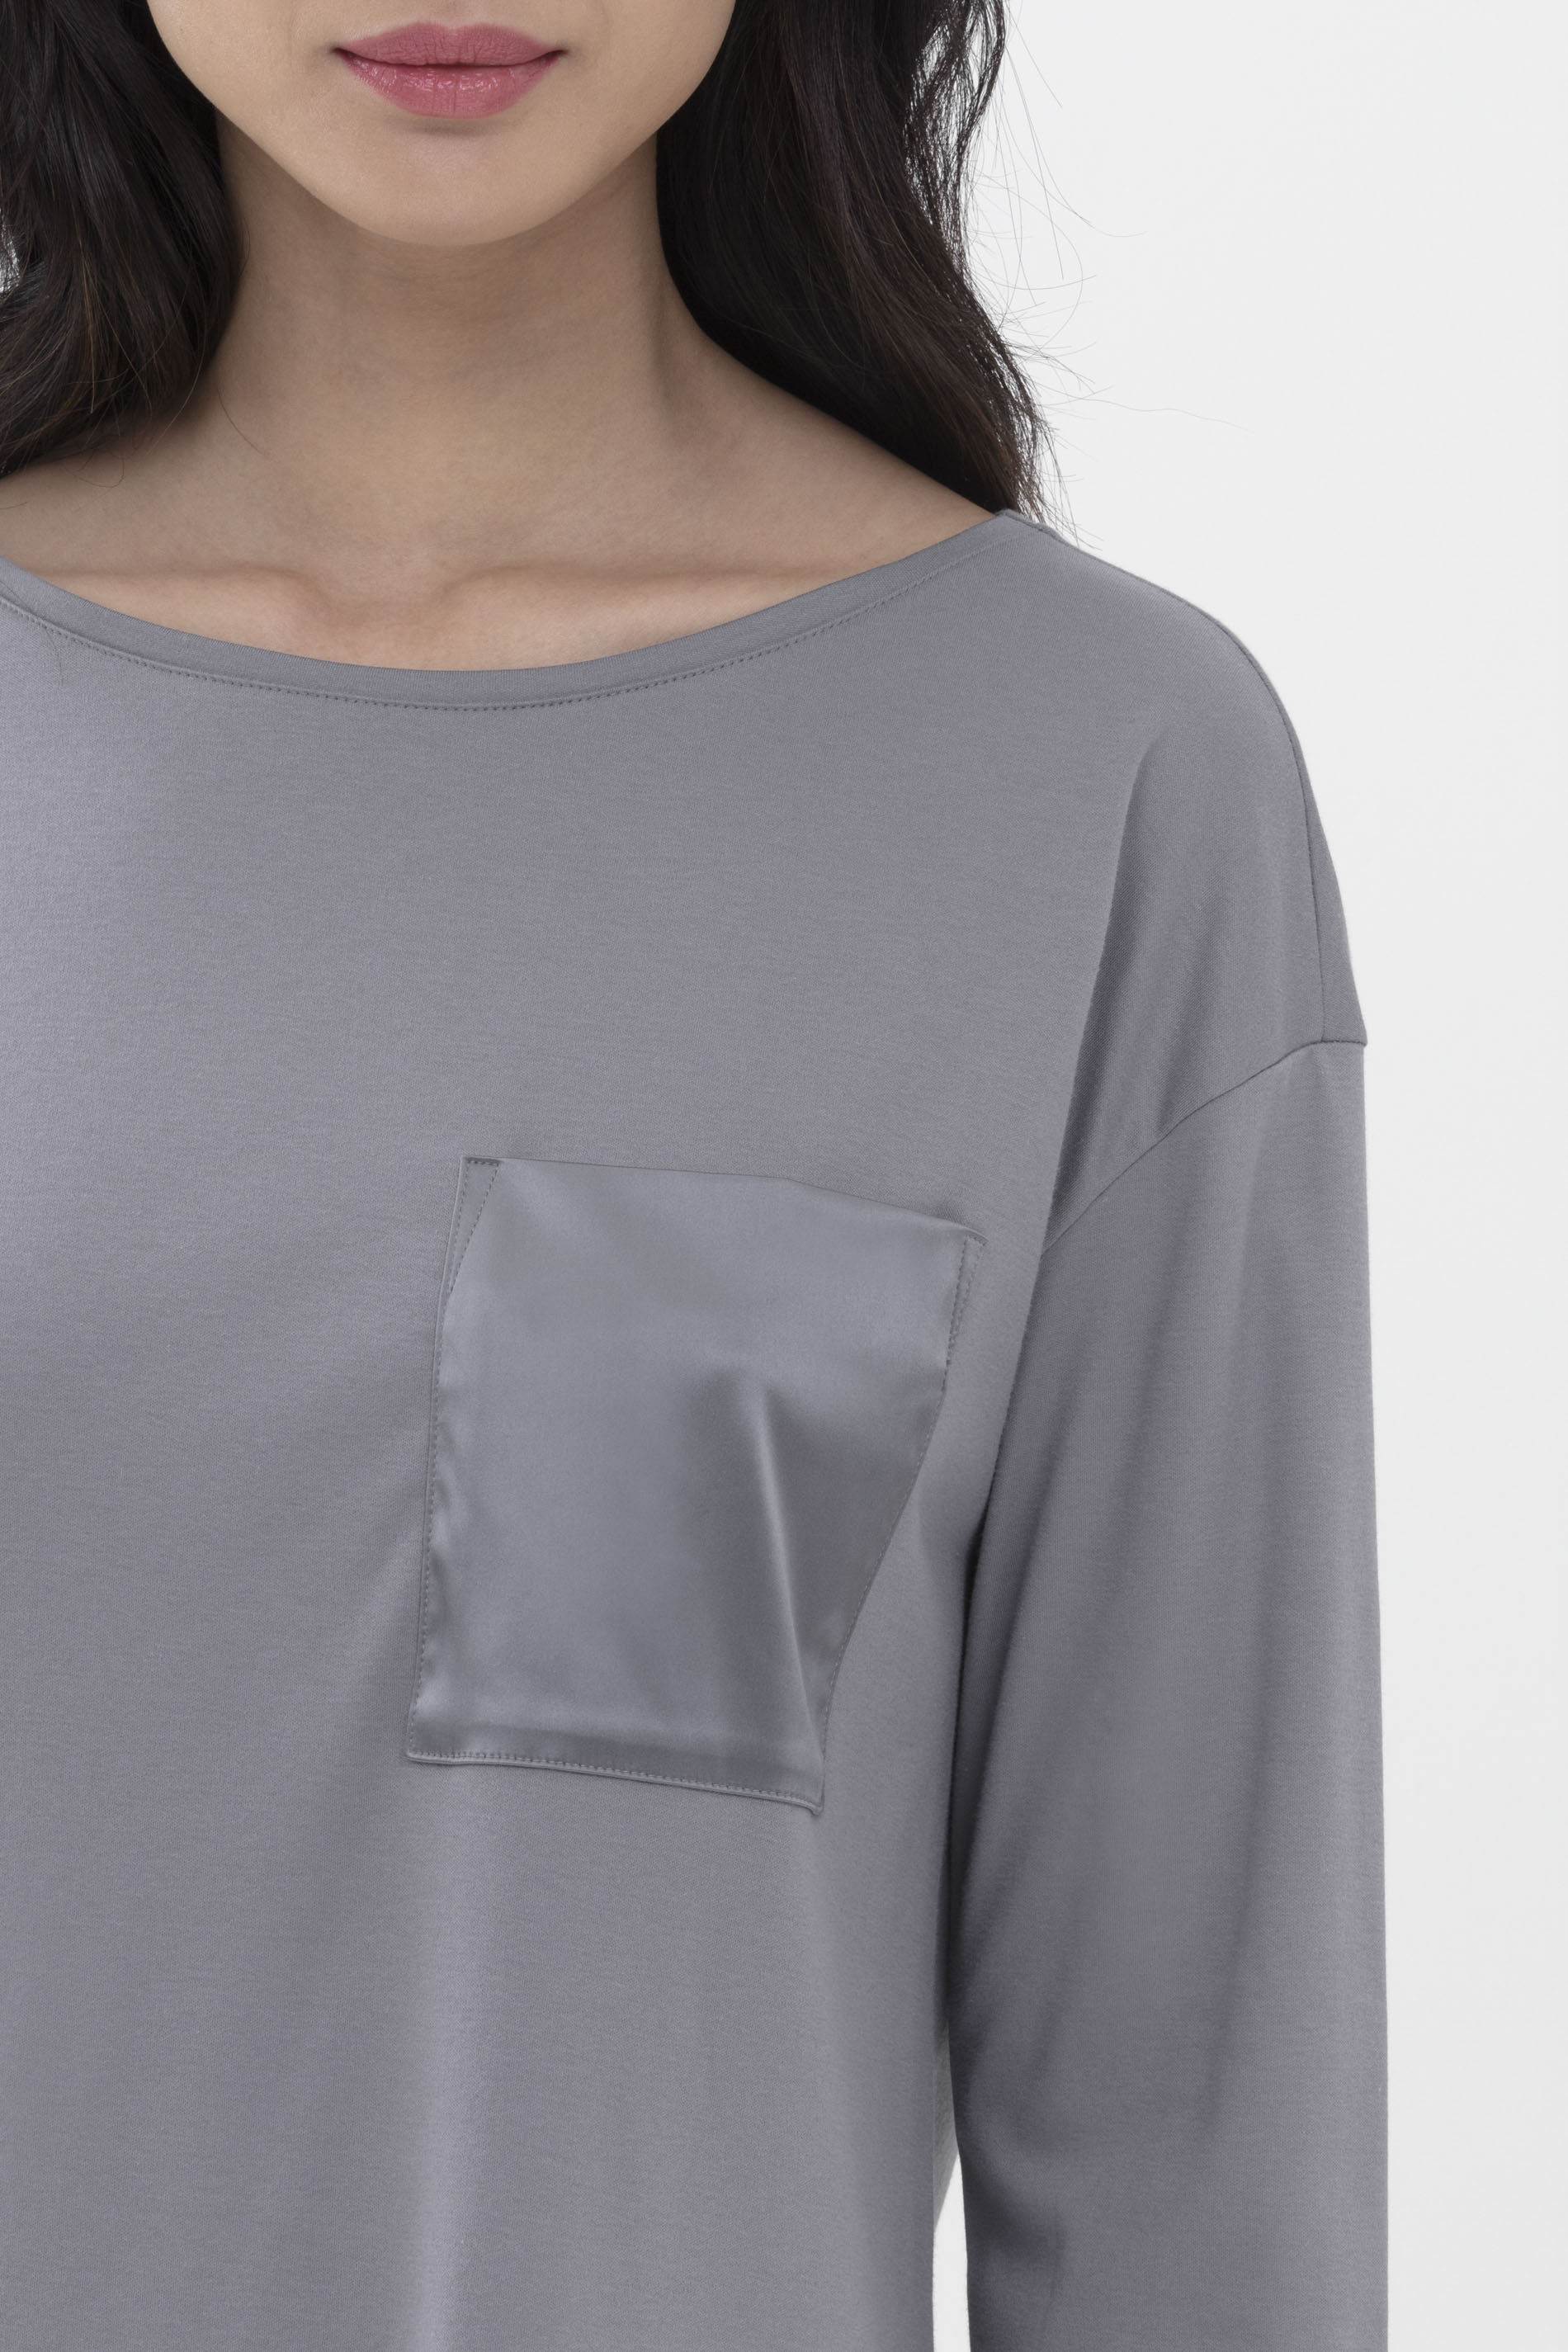 Nachthemd Lovely Grey Serie Sleepsation Detailweergave 01 | mey®